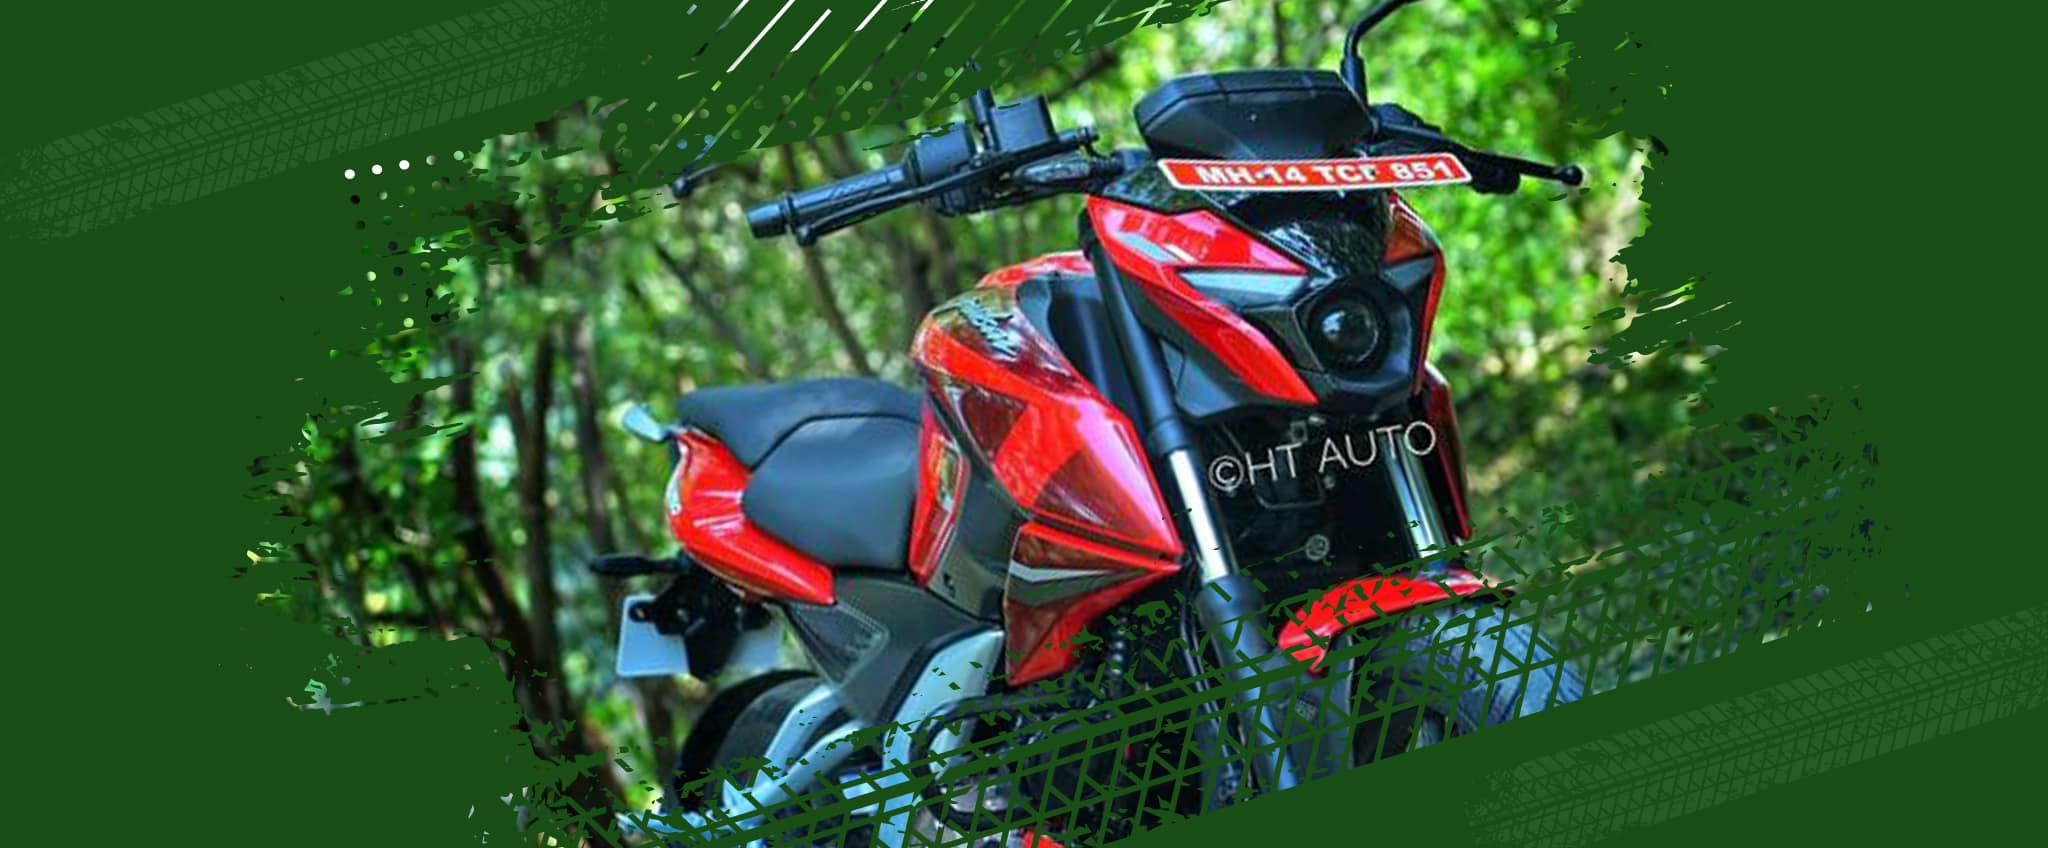 موتور باجاج پالس ۲۵۰ قدرتمندترین موتورسیکلت سری پولسار یا پالس است